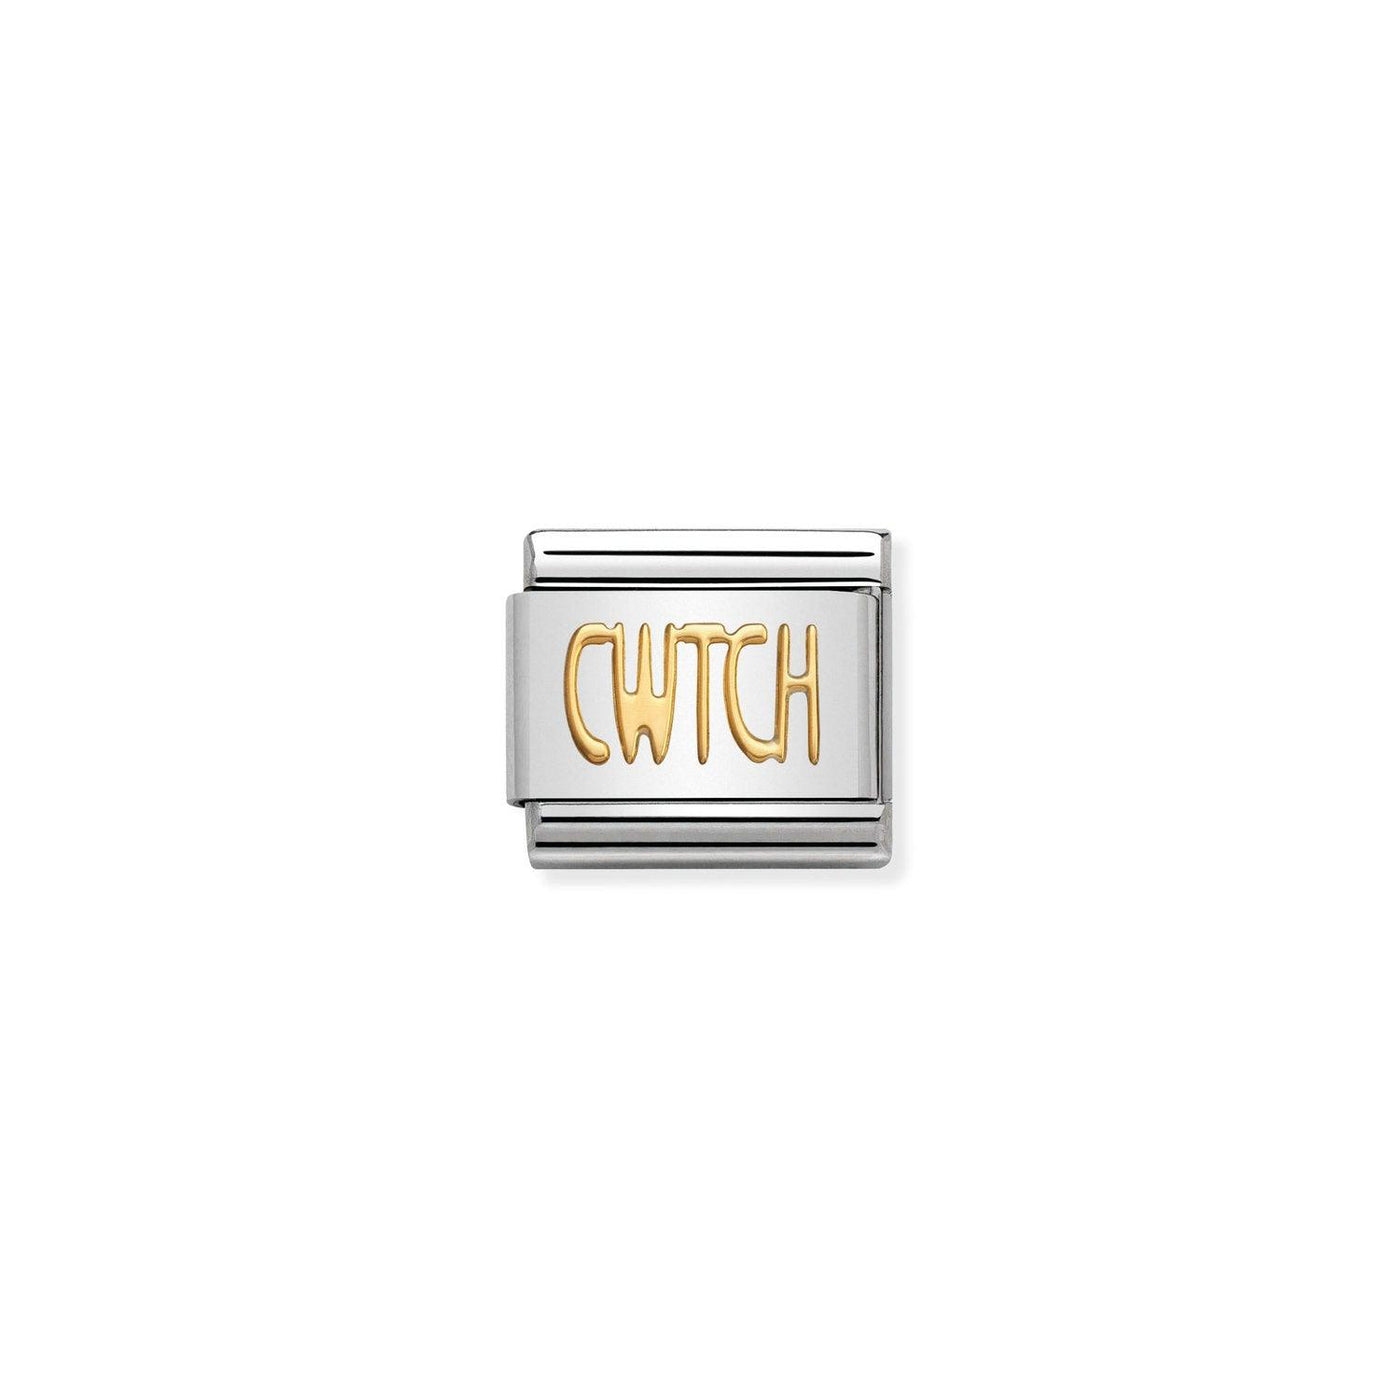 Nomination Classic Cwtch Charm - Rococo Jewellery